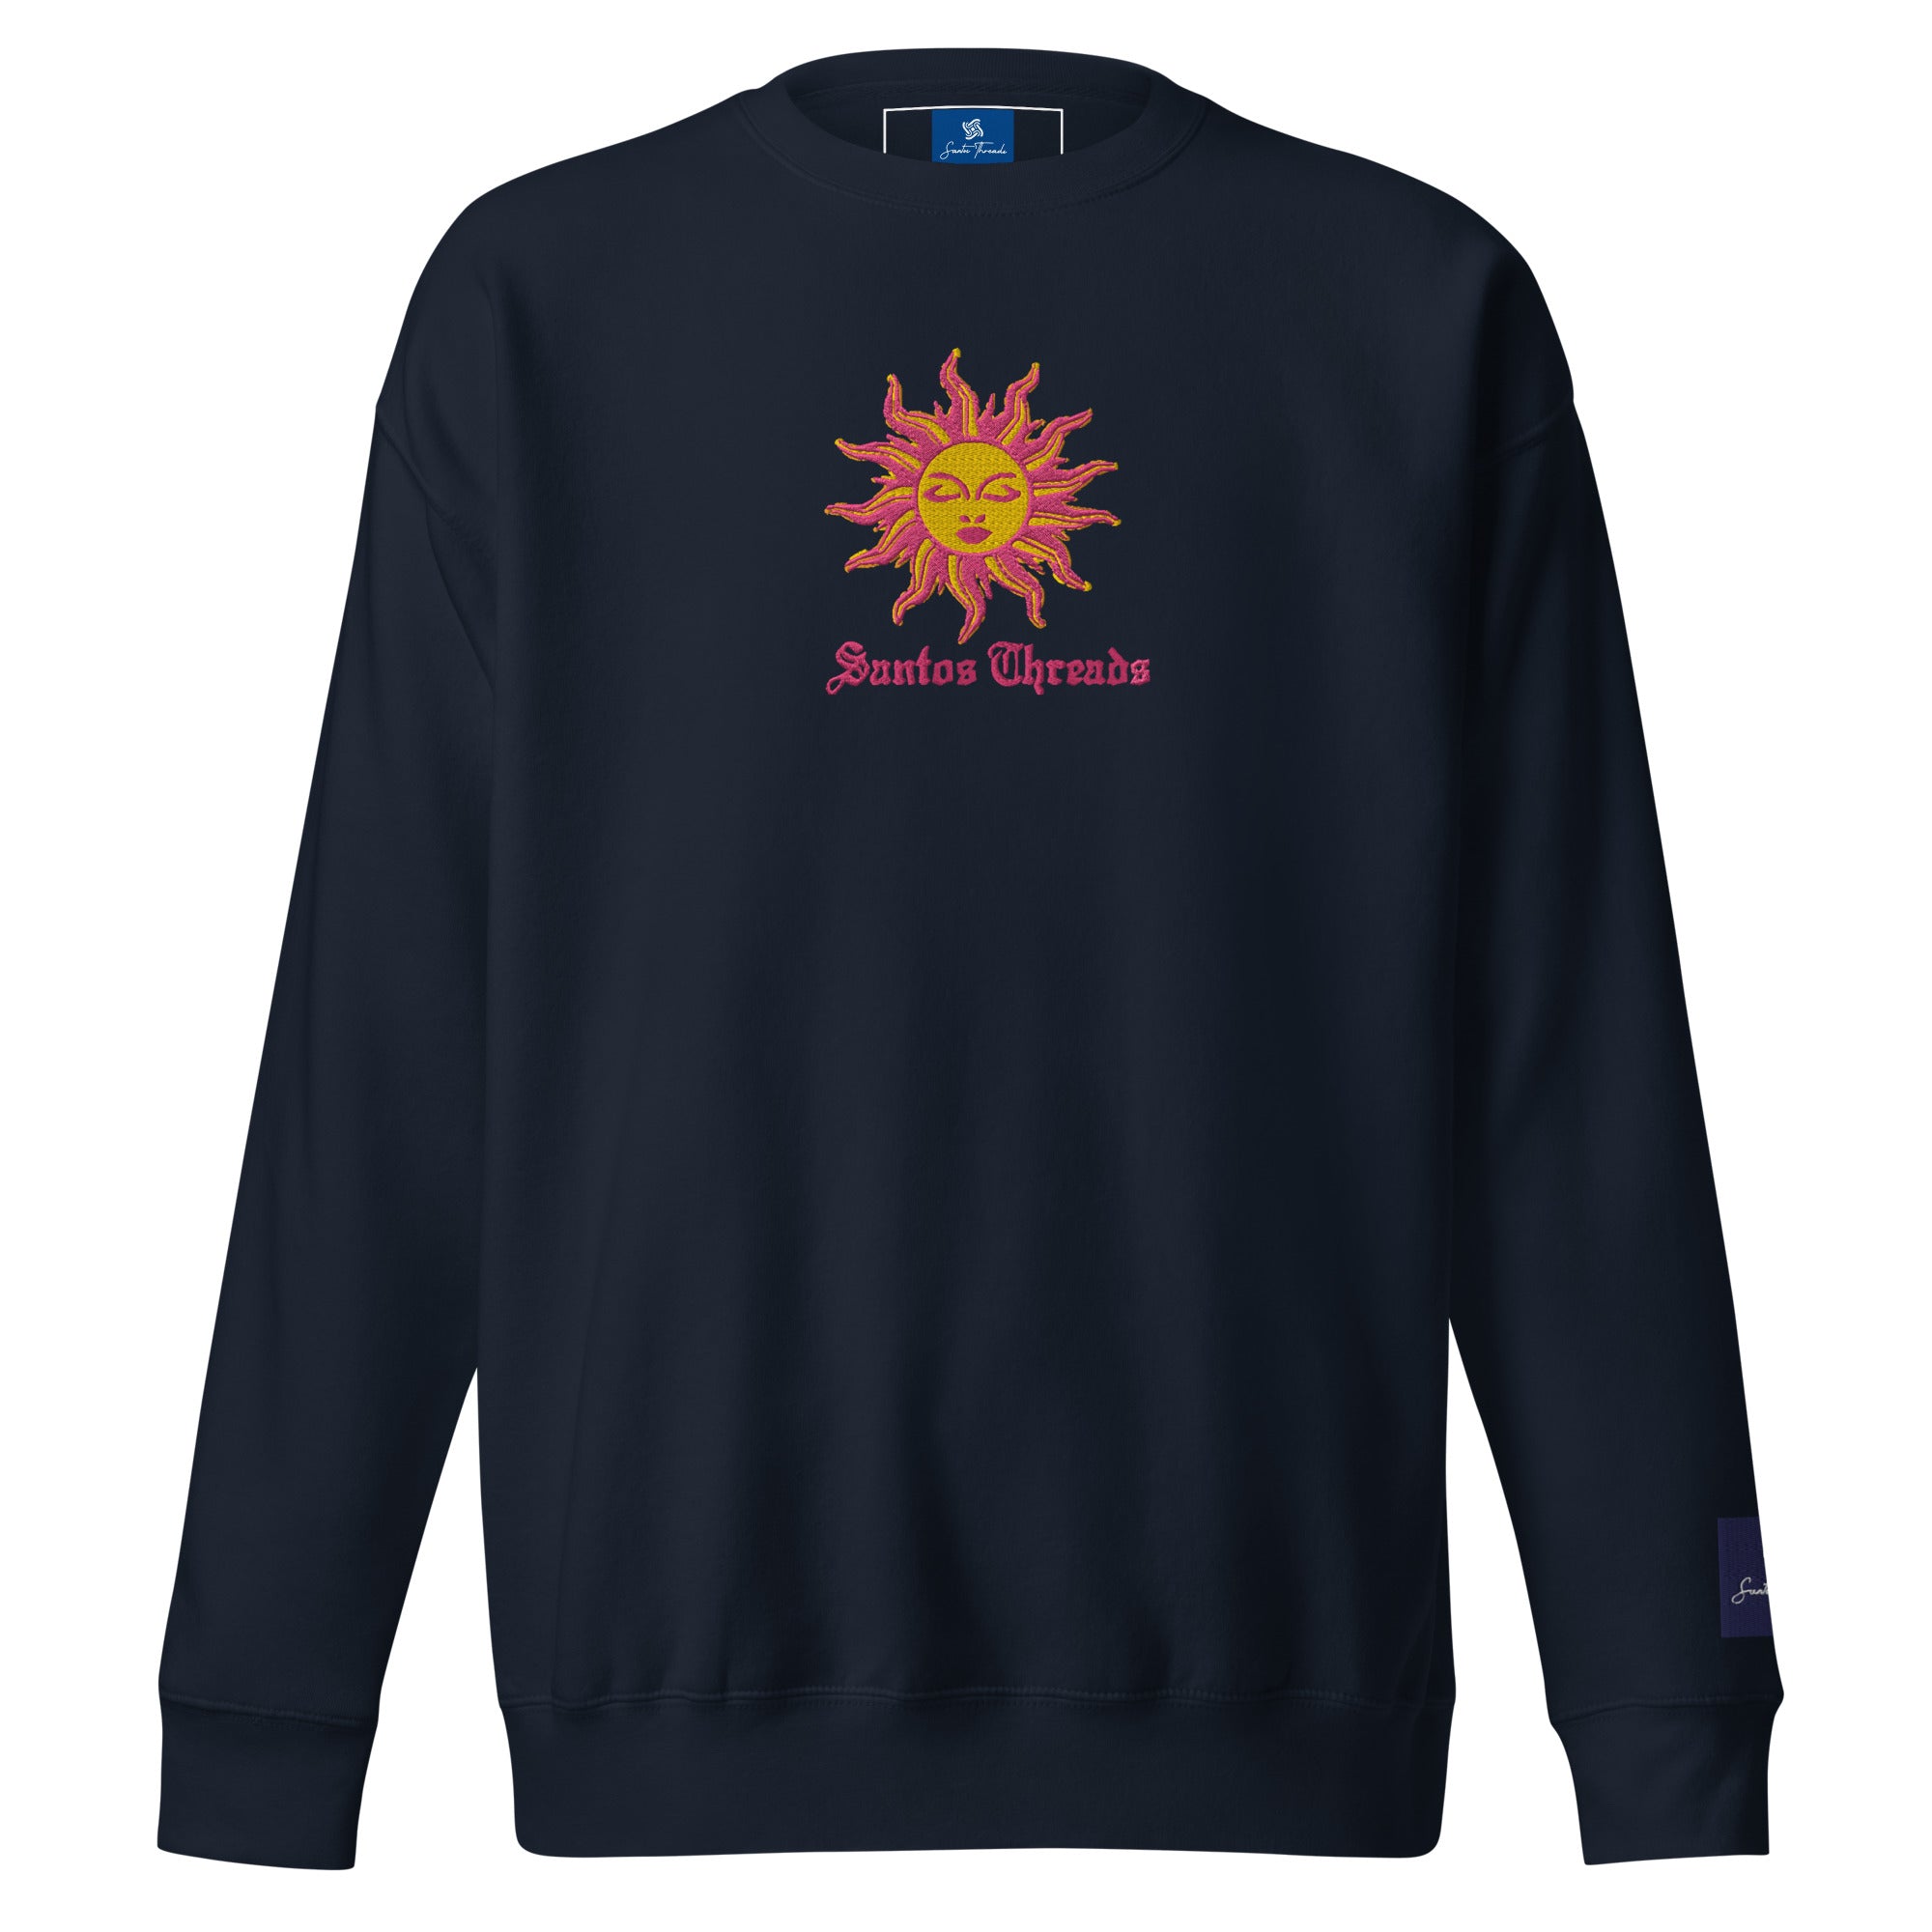 Lovely Sun Embroidered Premium Sweatshirt